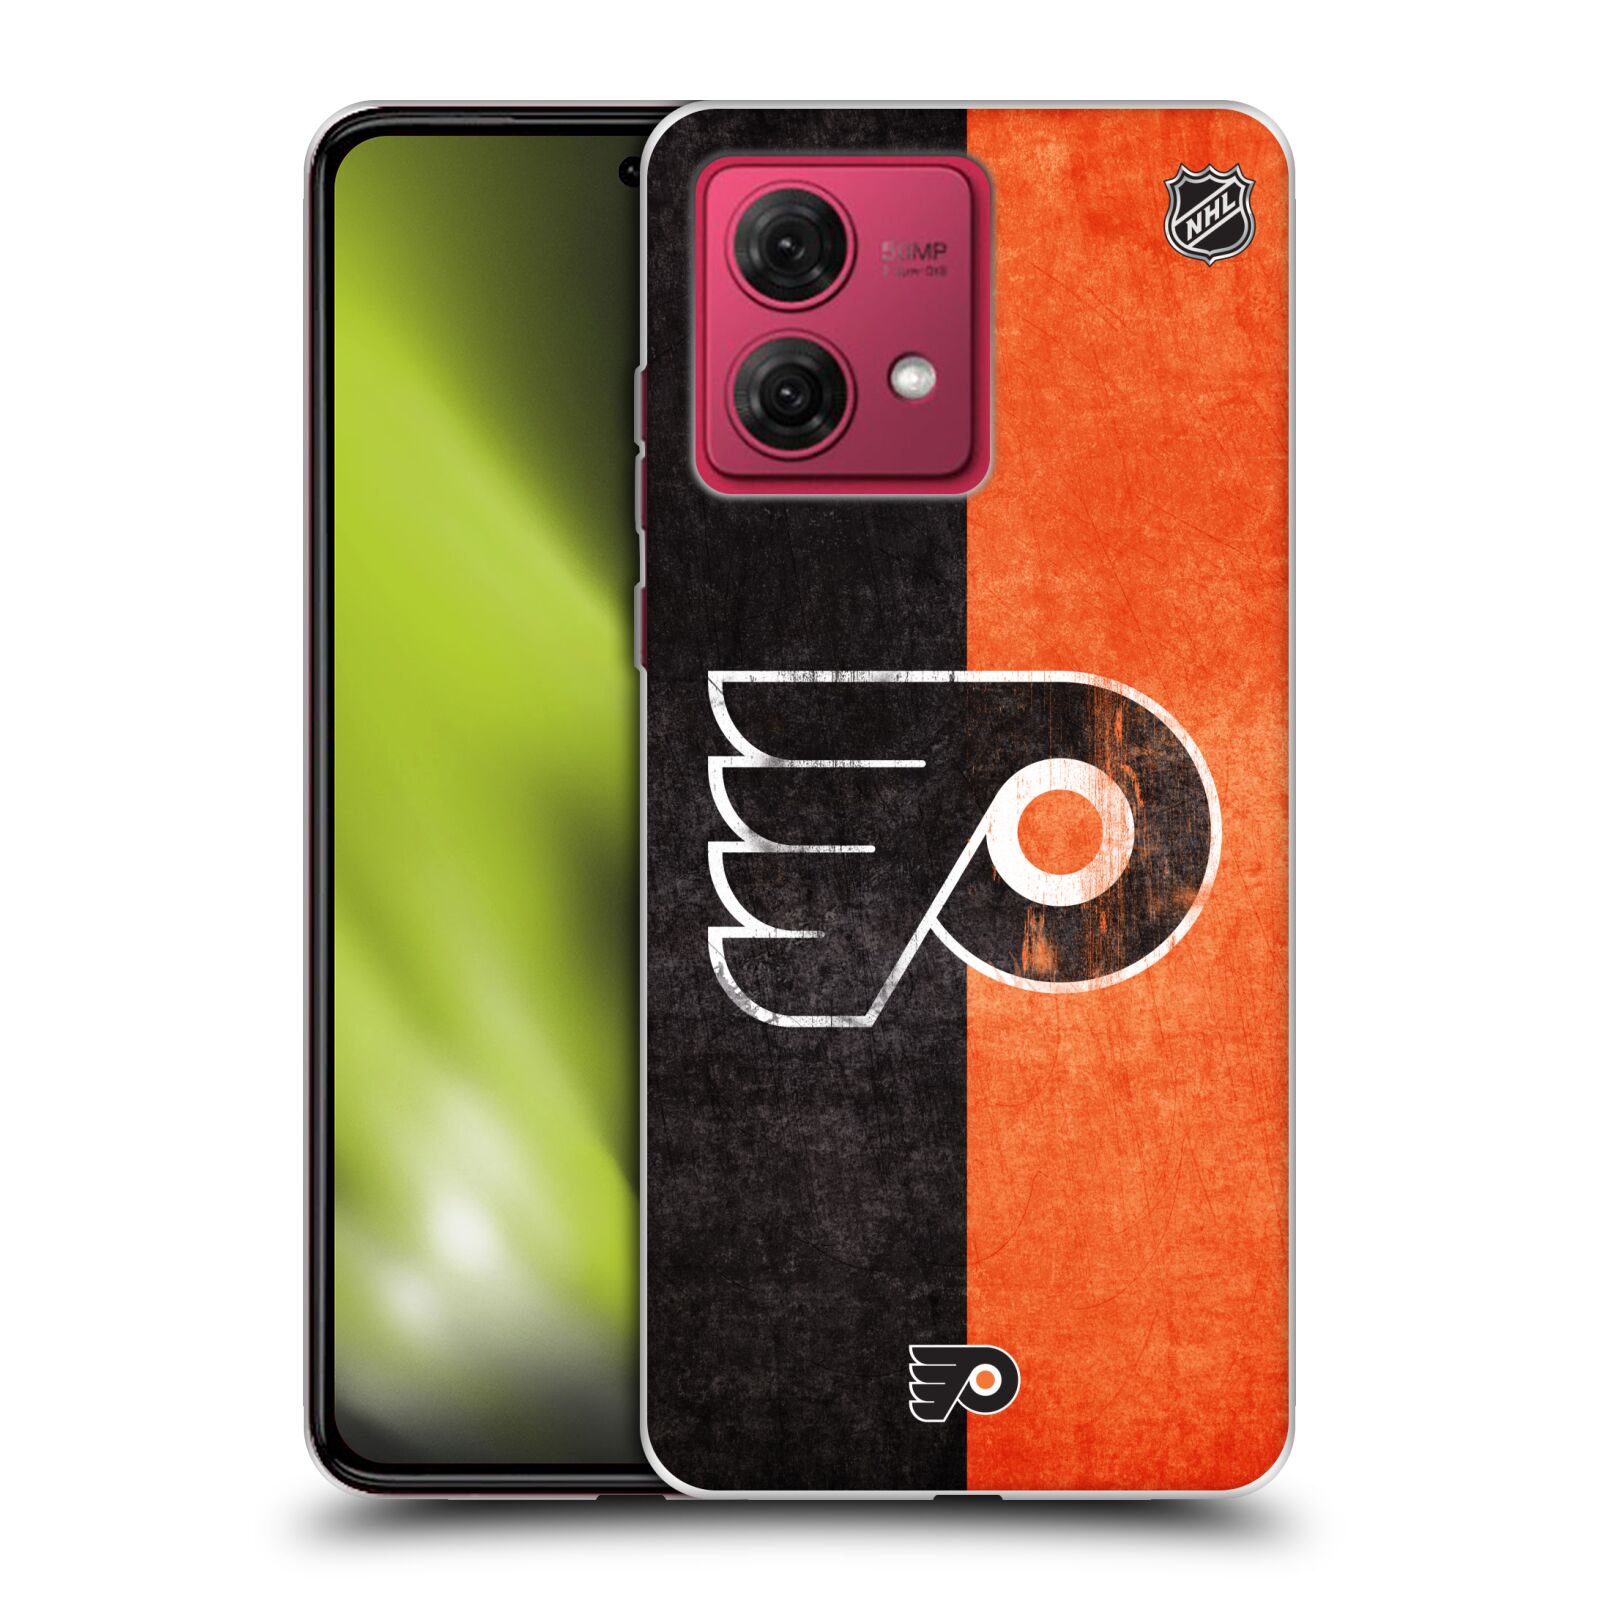 Silikonové pouzdro na mobil Motorola Moto G84 5G - NHL - Půlené logo Philadelphia Flyers (Silikonový kryt, obal, pouzdro na mobilní telefon Motorola Moto G84 5G s licencovaným motivem NHL - Půlené logo Philadelphia Flyers)